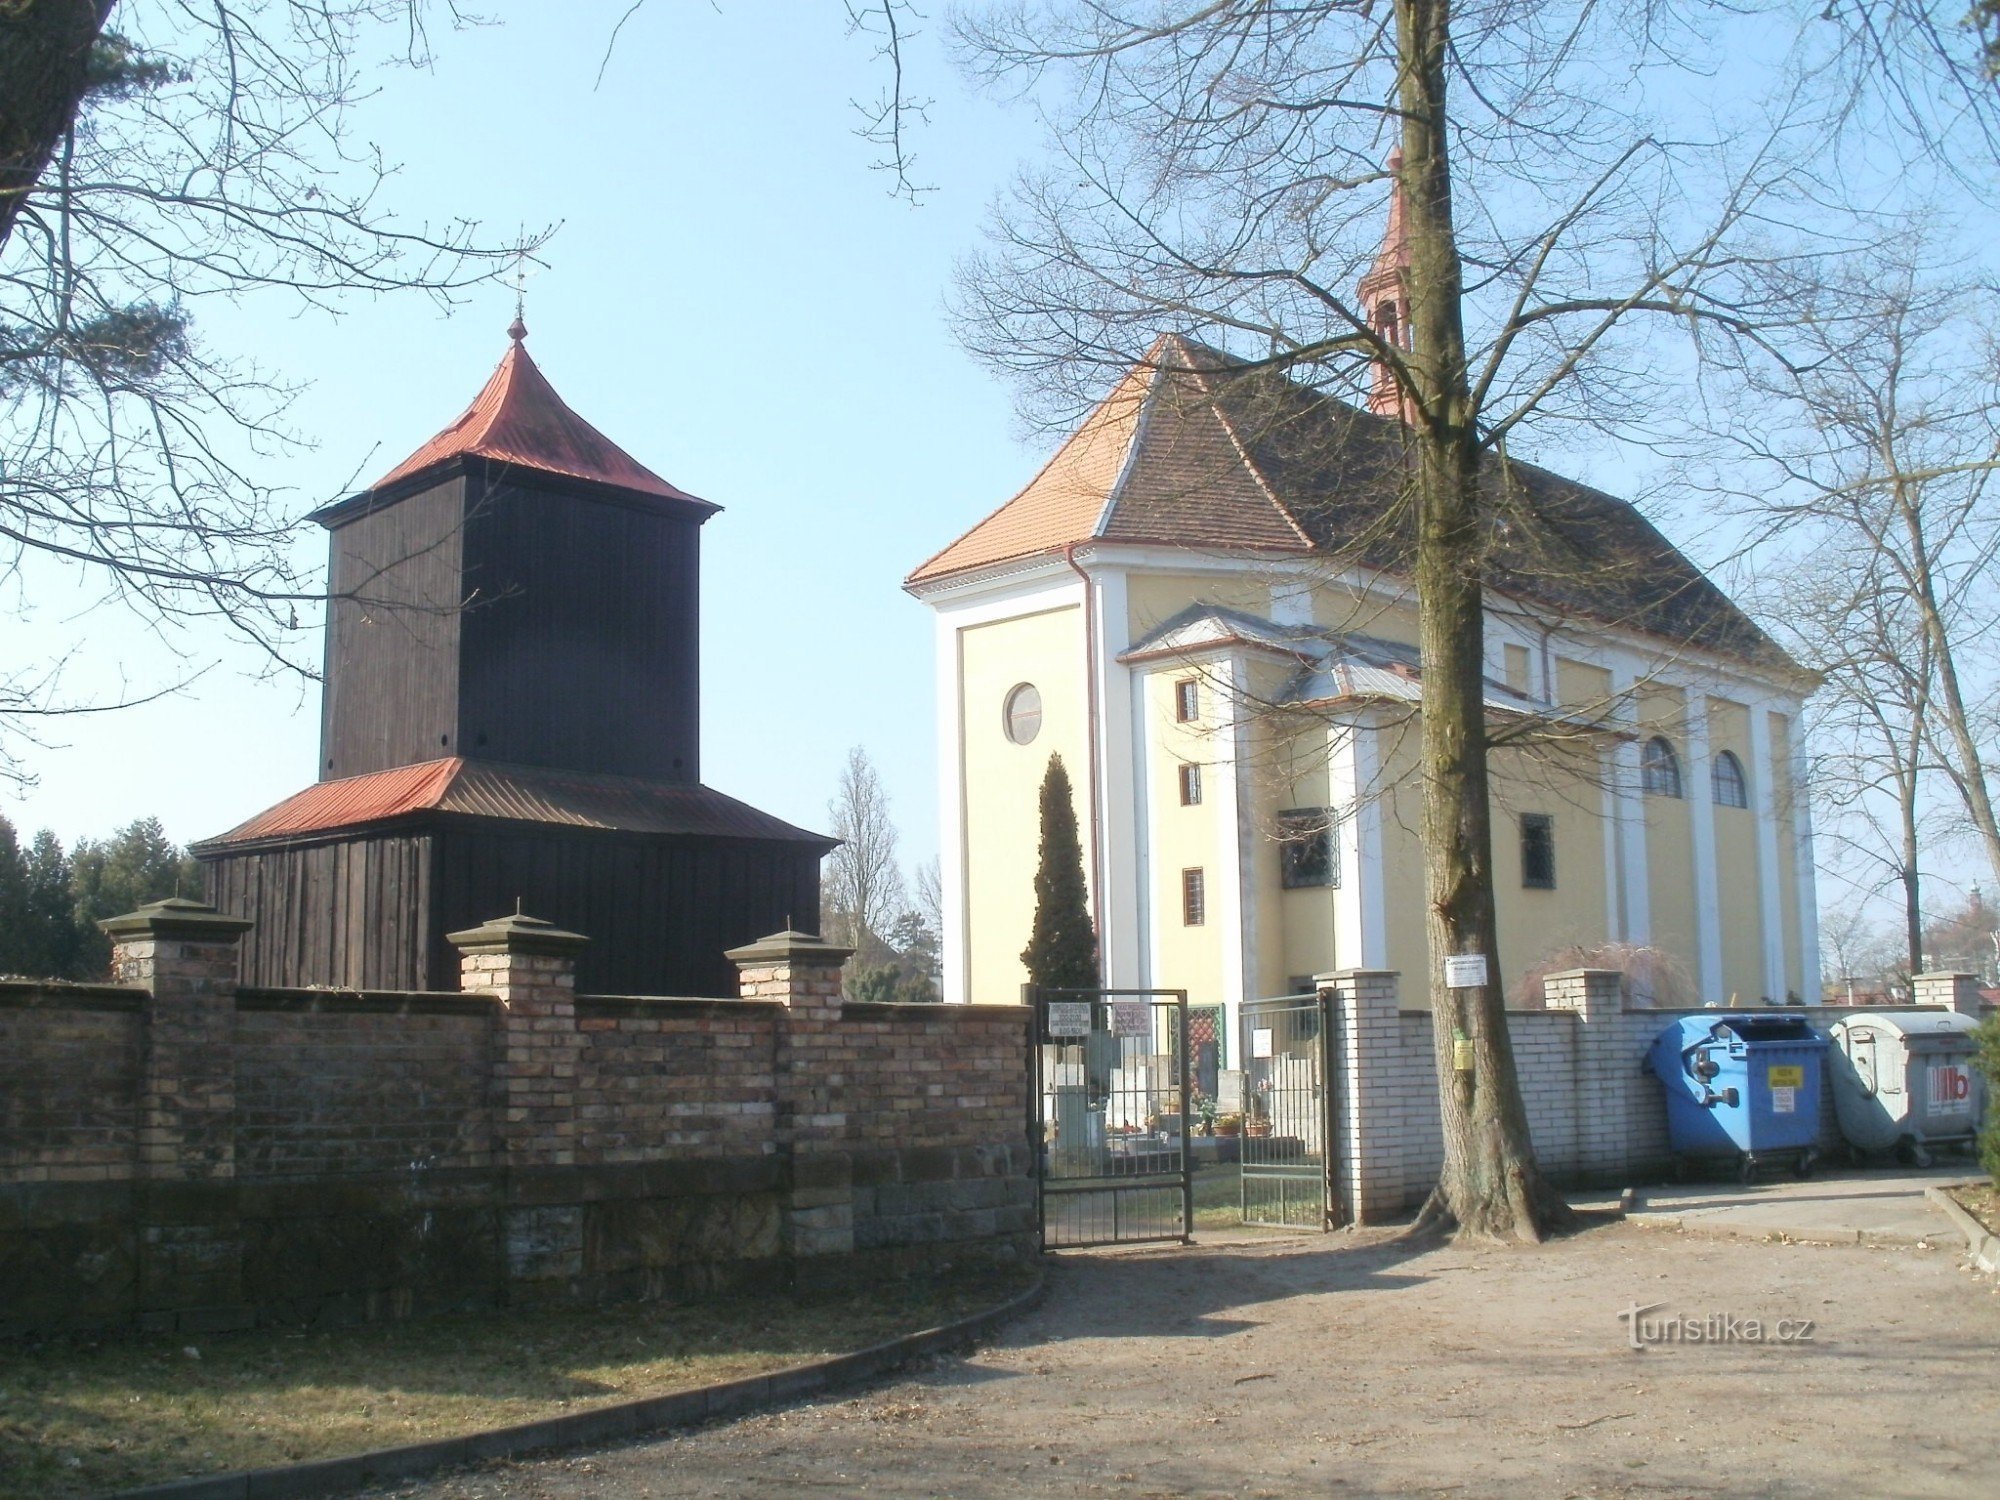 Borohrádek - église de St. Michel l'Archange